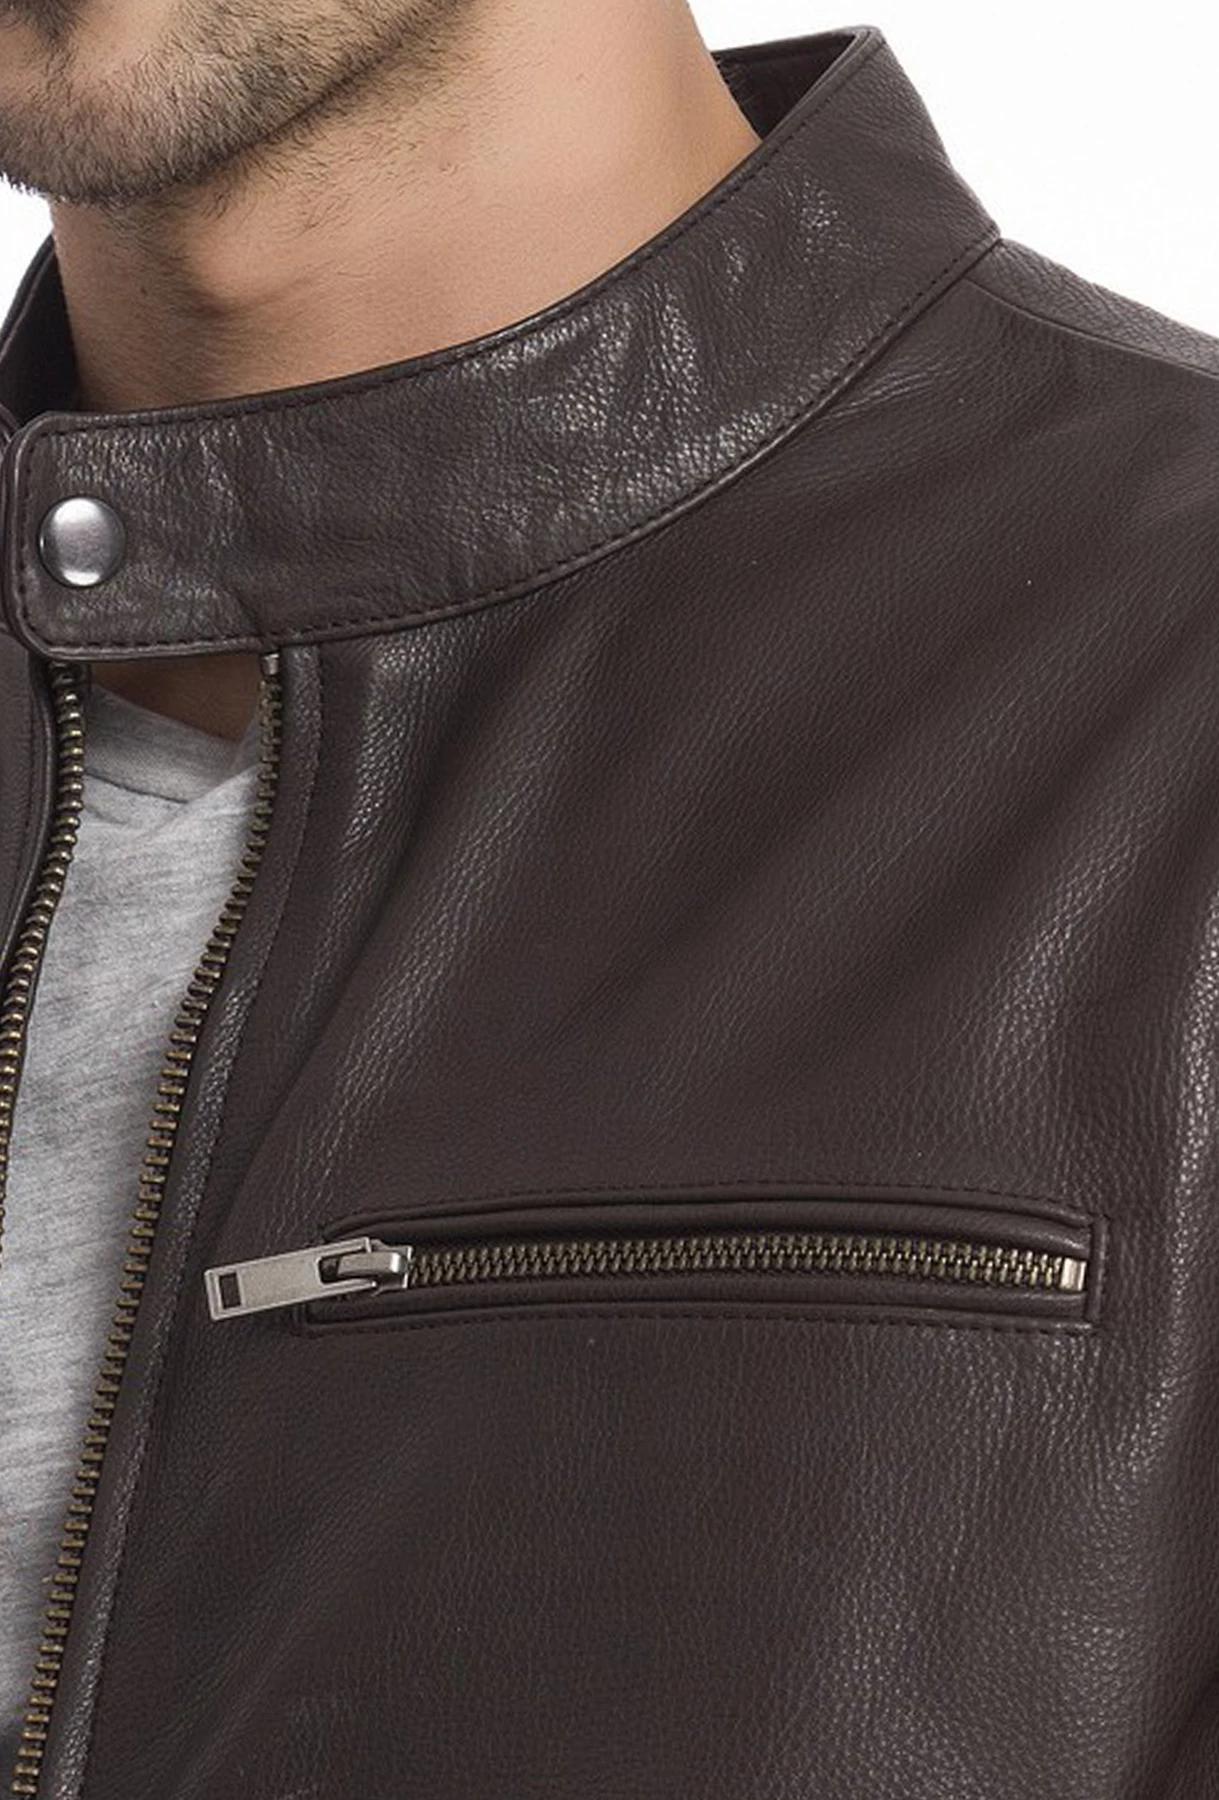 Bomber round collar Leather Jacket